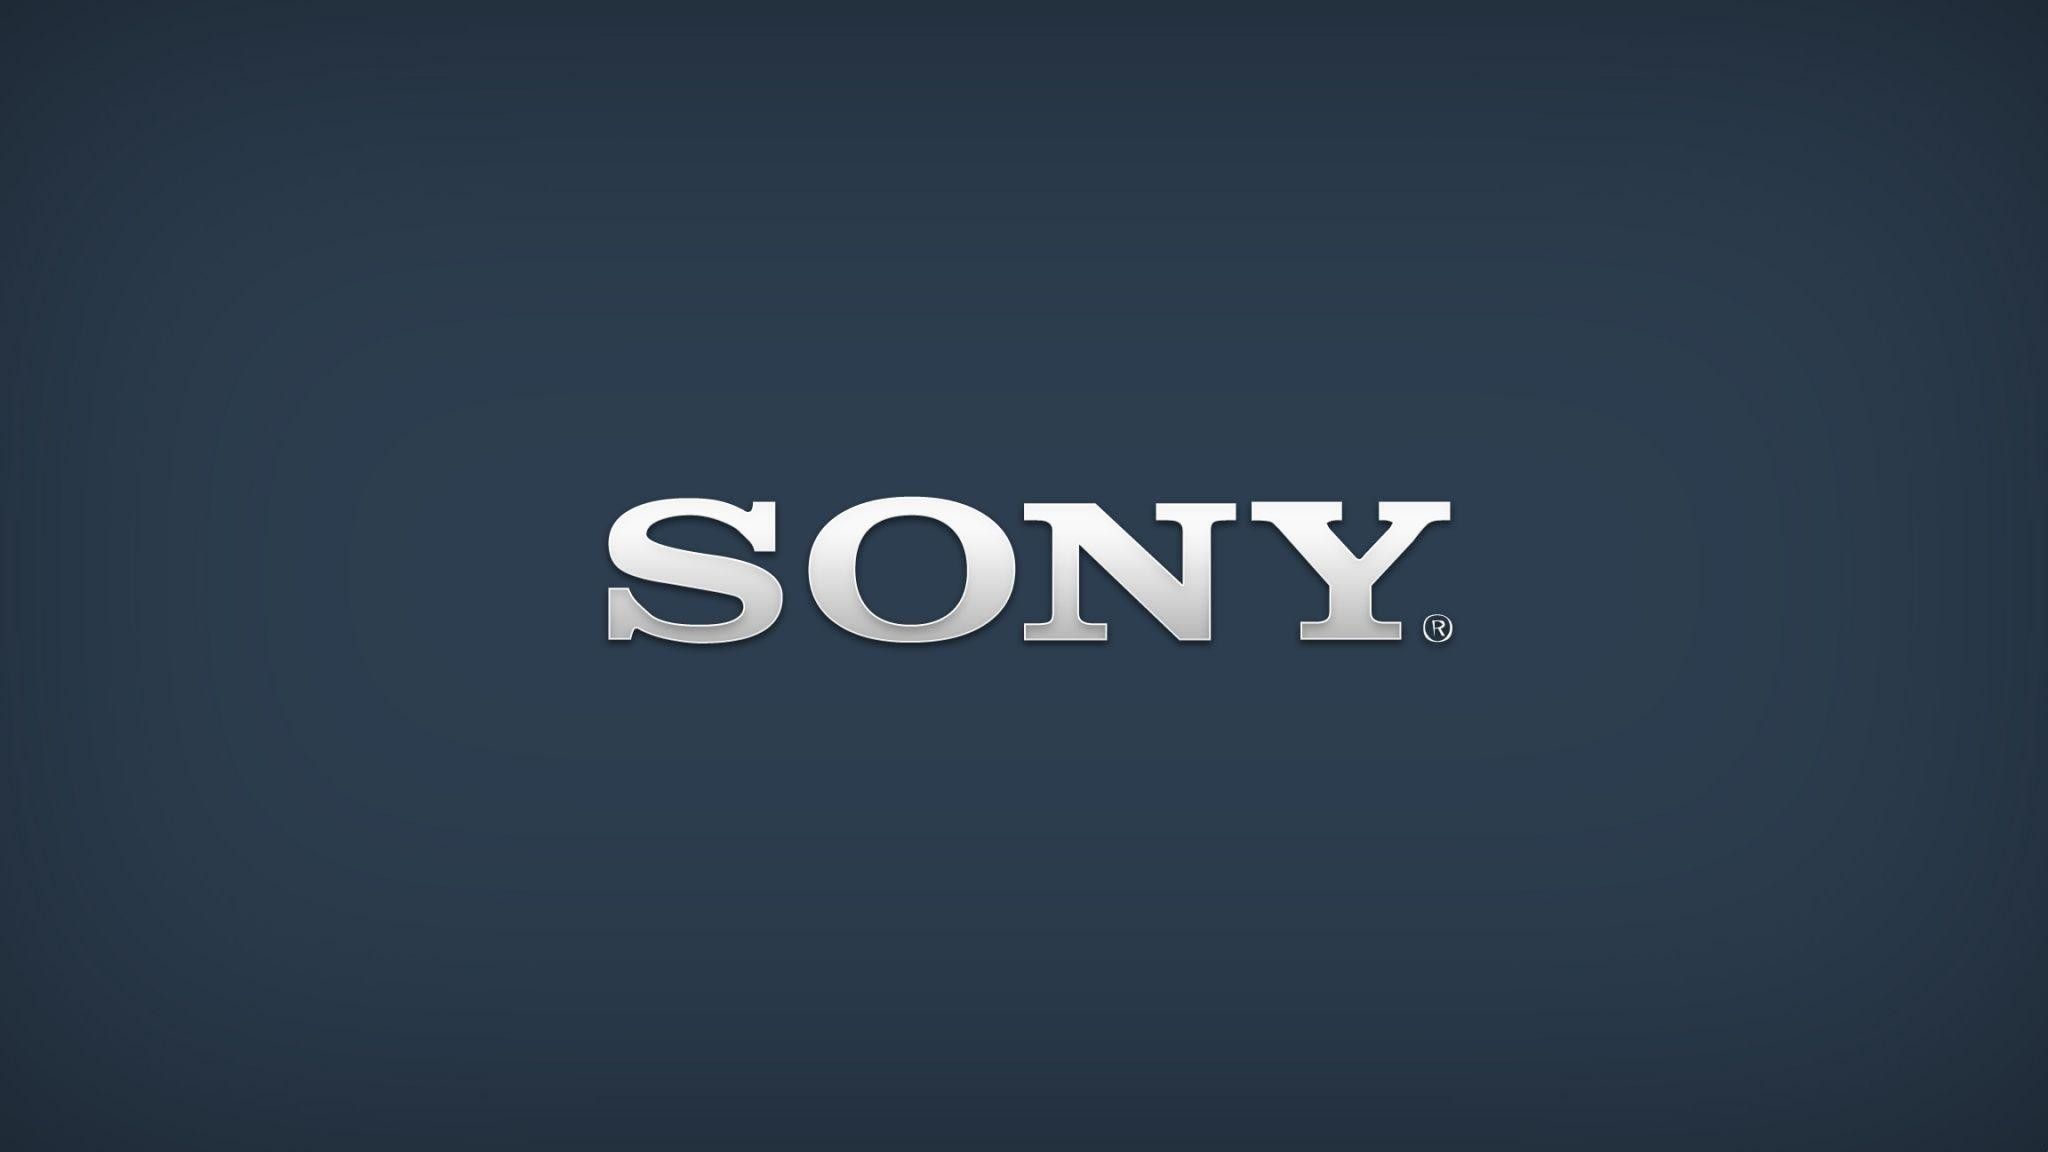 Perusahaan teknologi asal Jepang, Sony.